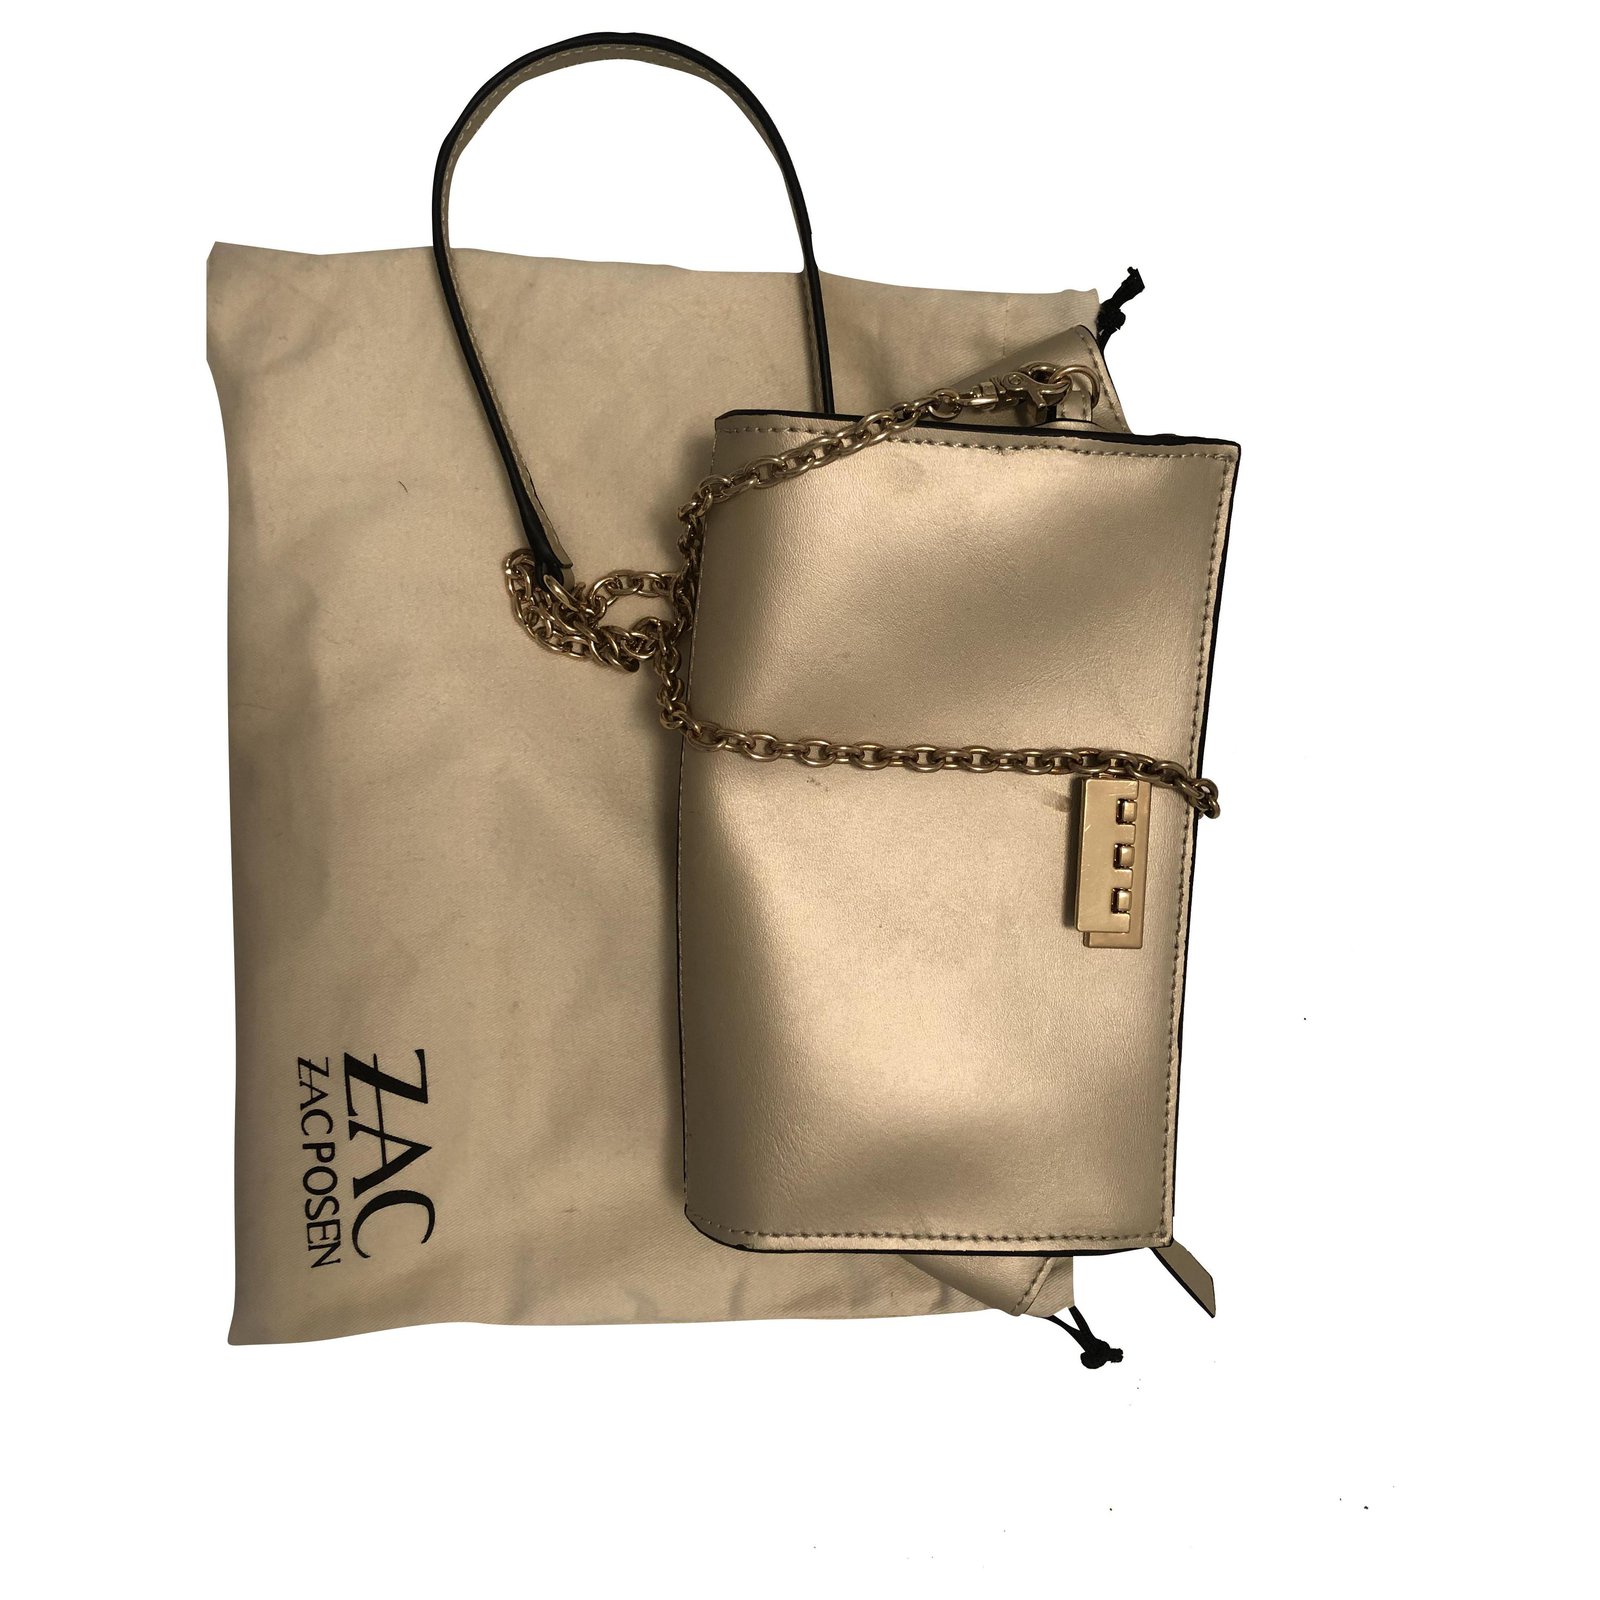 Zac Posen Gold Tote Bags for Women